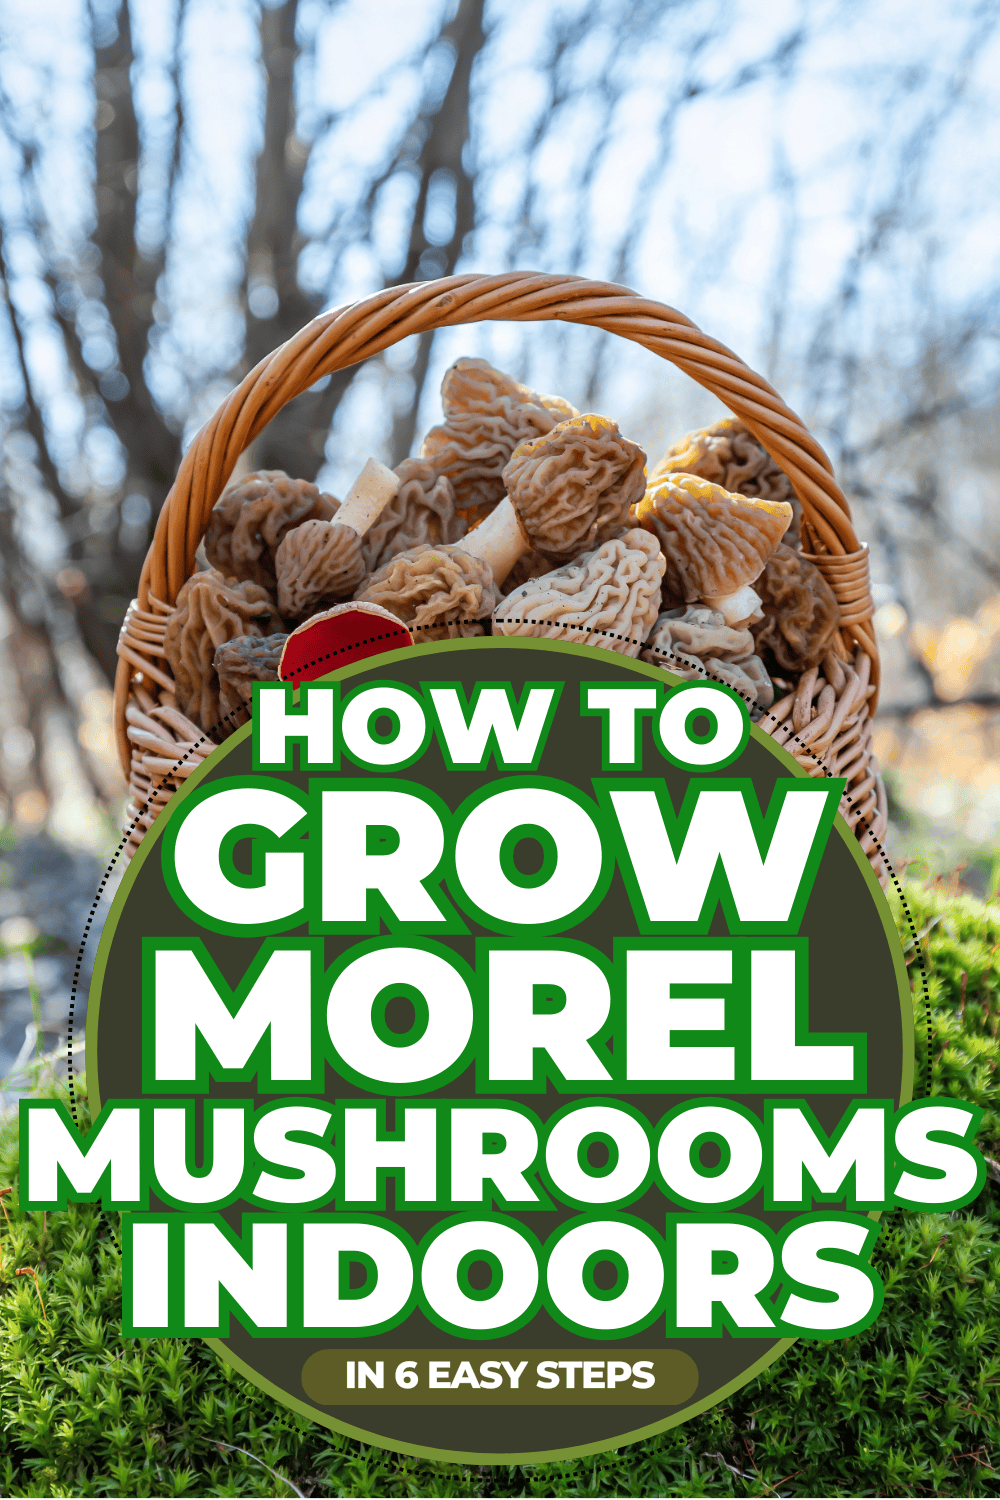 How To Grow Morel Mushrooms Indoors [In 6 Easy Steps!]